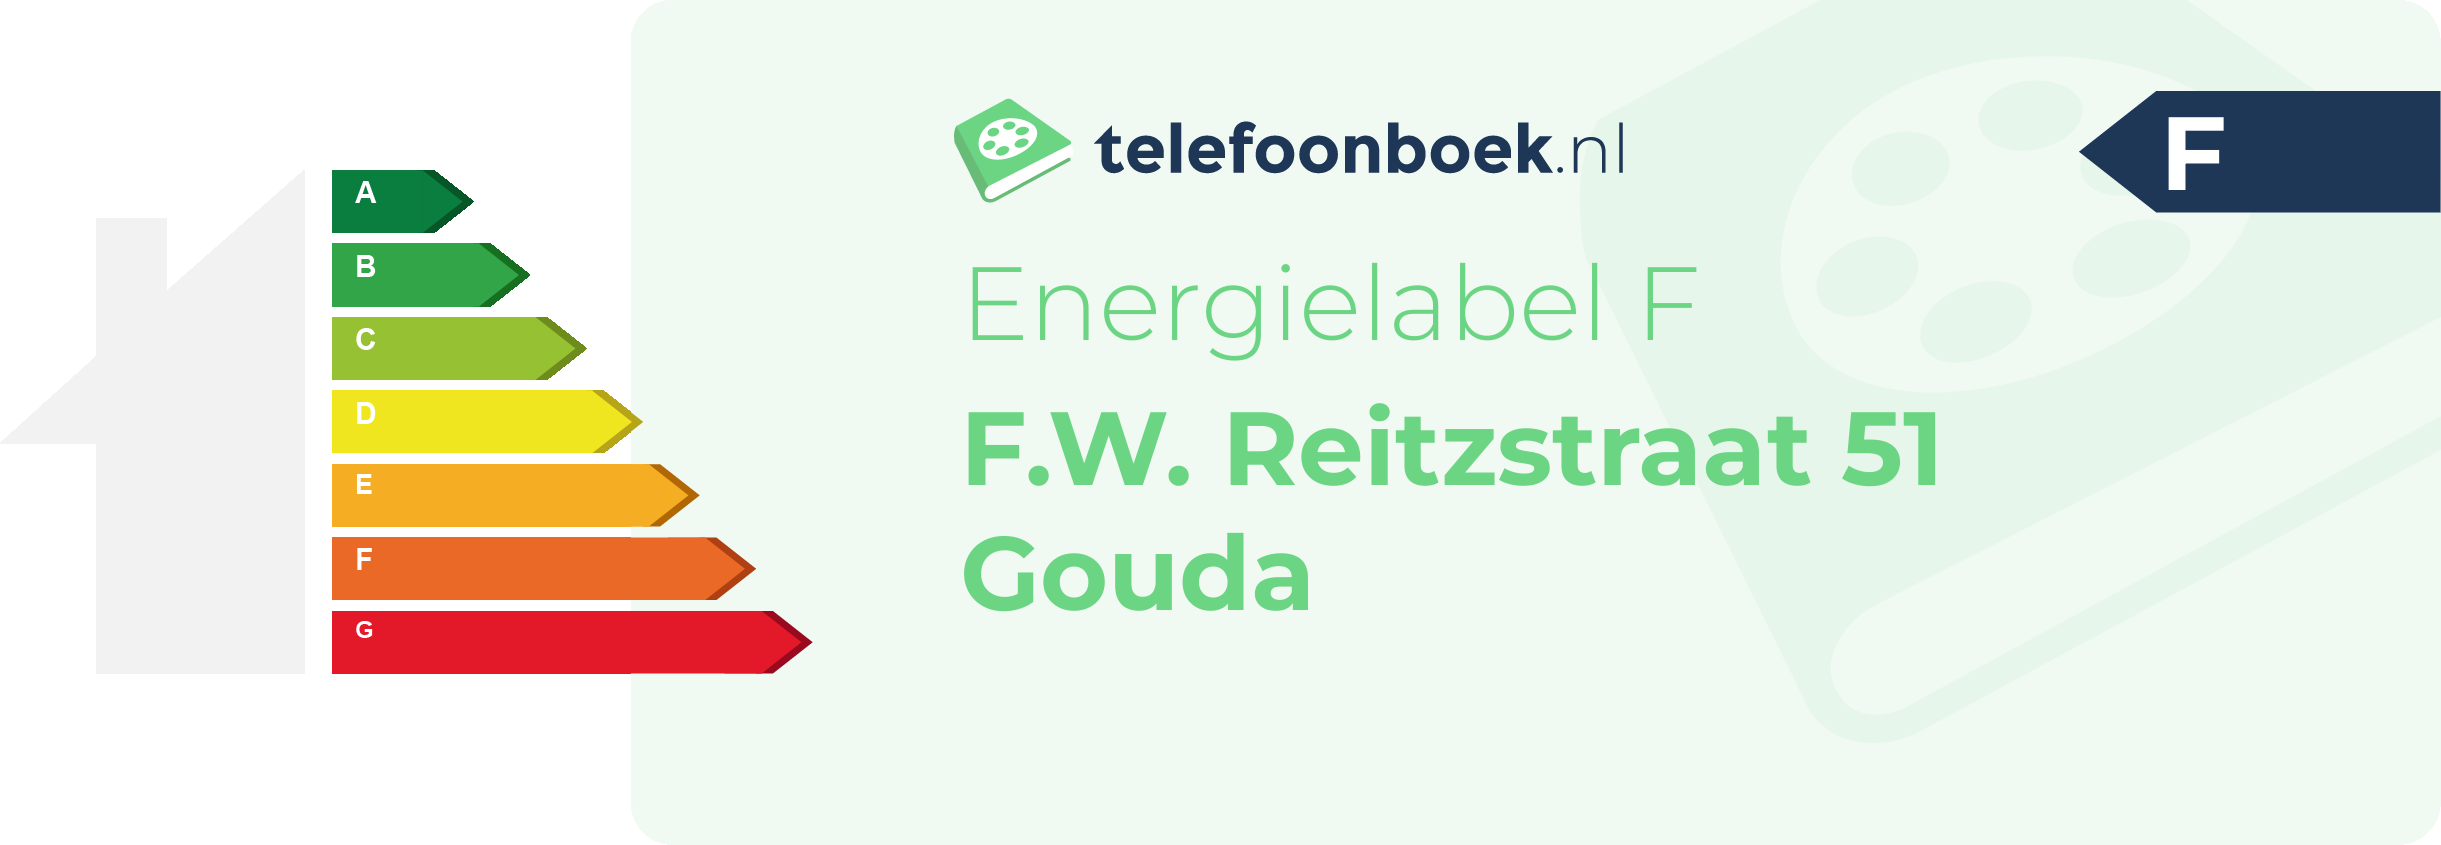 Energielabel F.W. Reitzstraat 51 Gouda